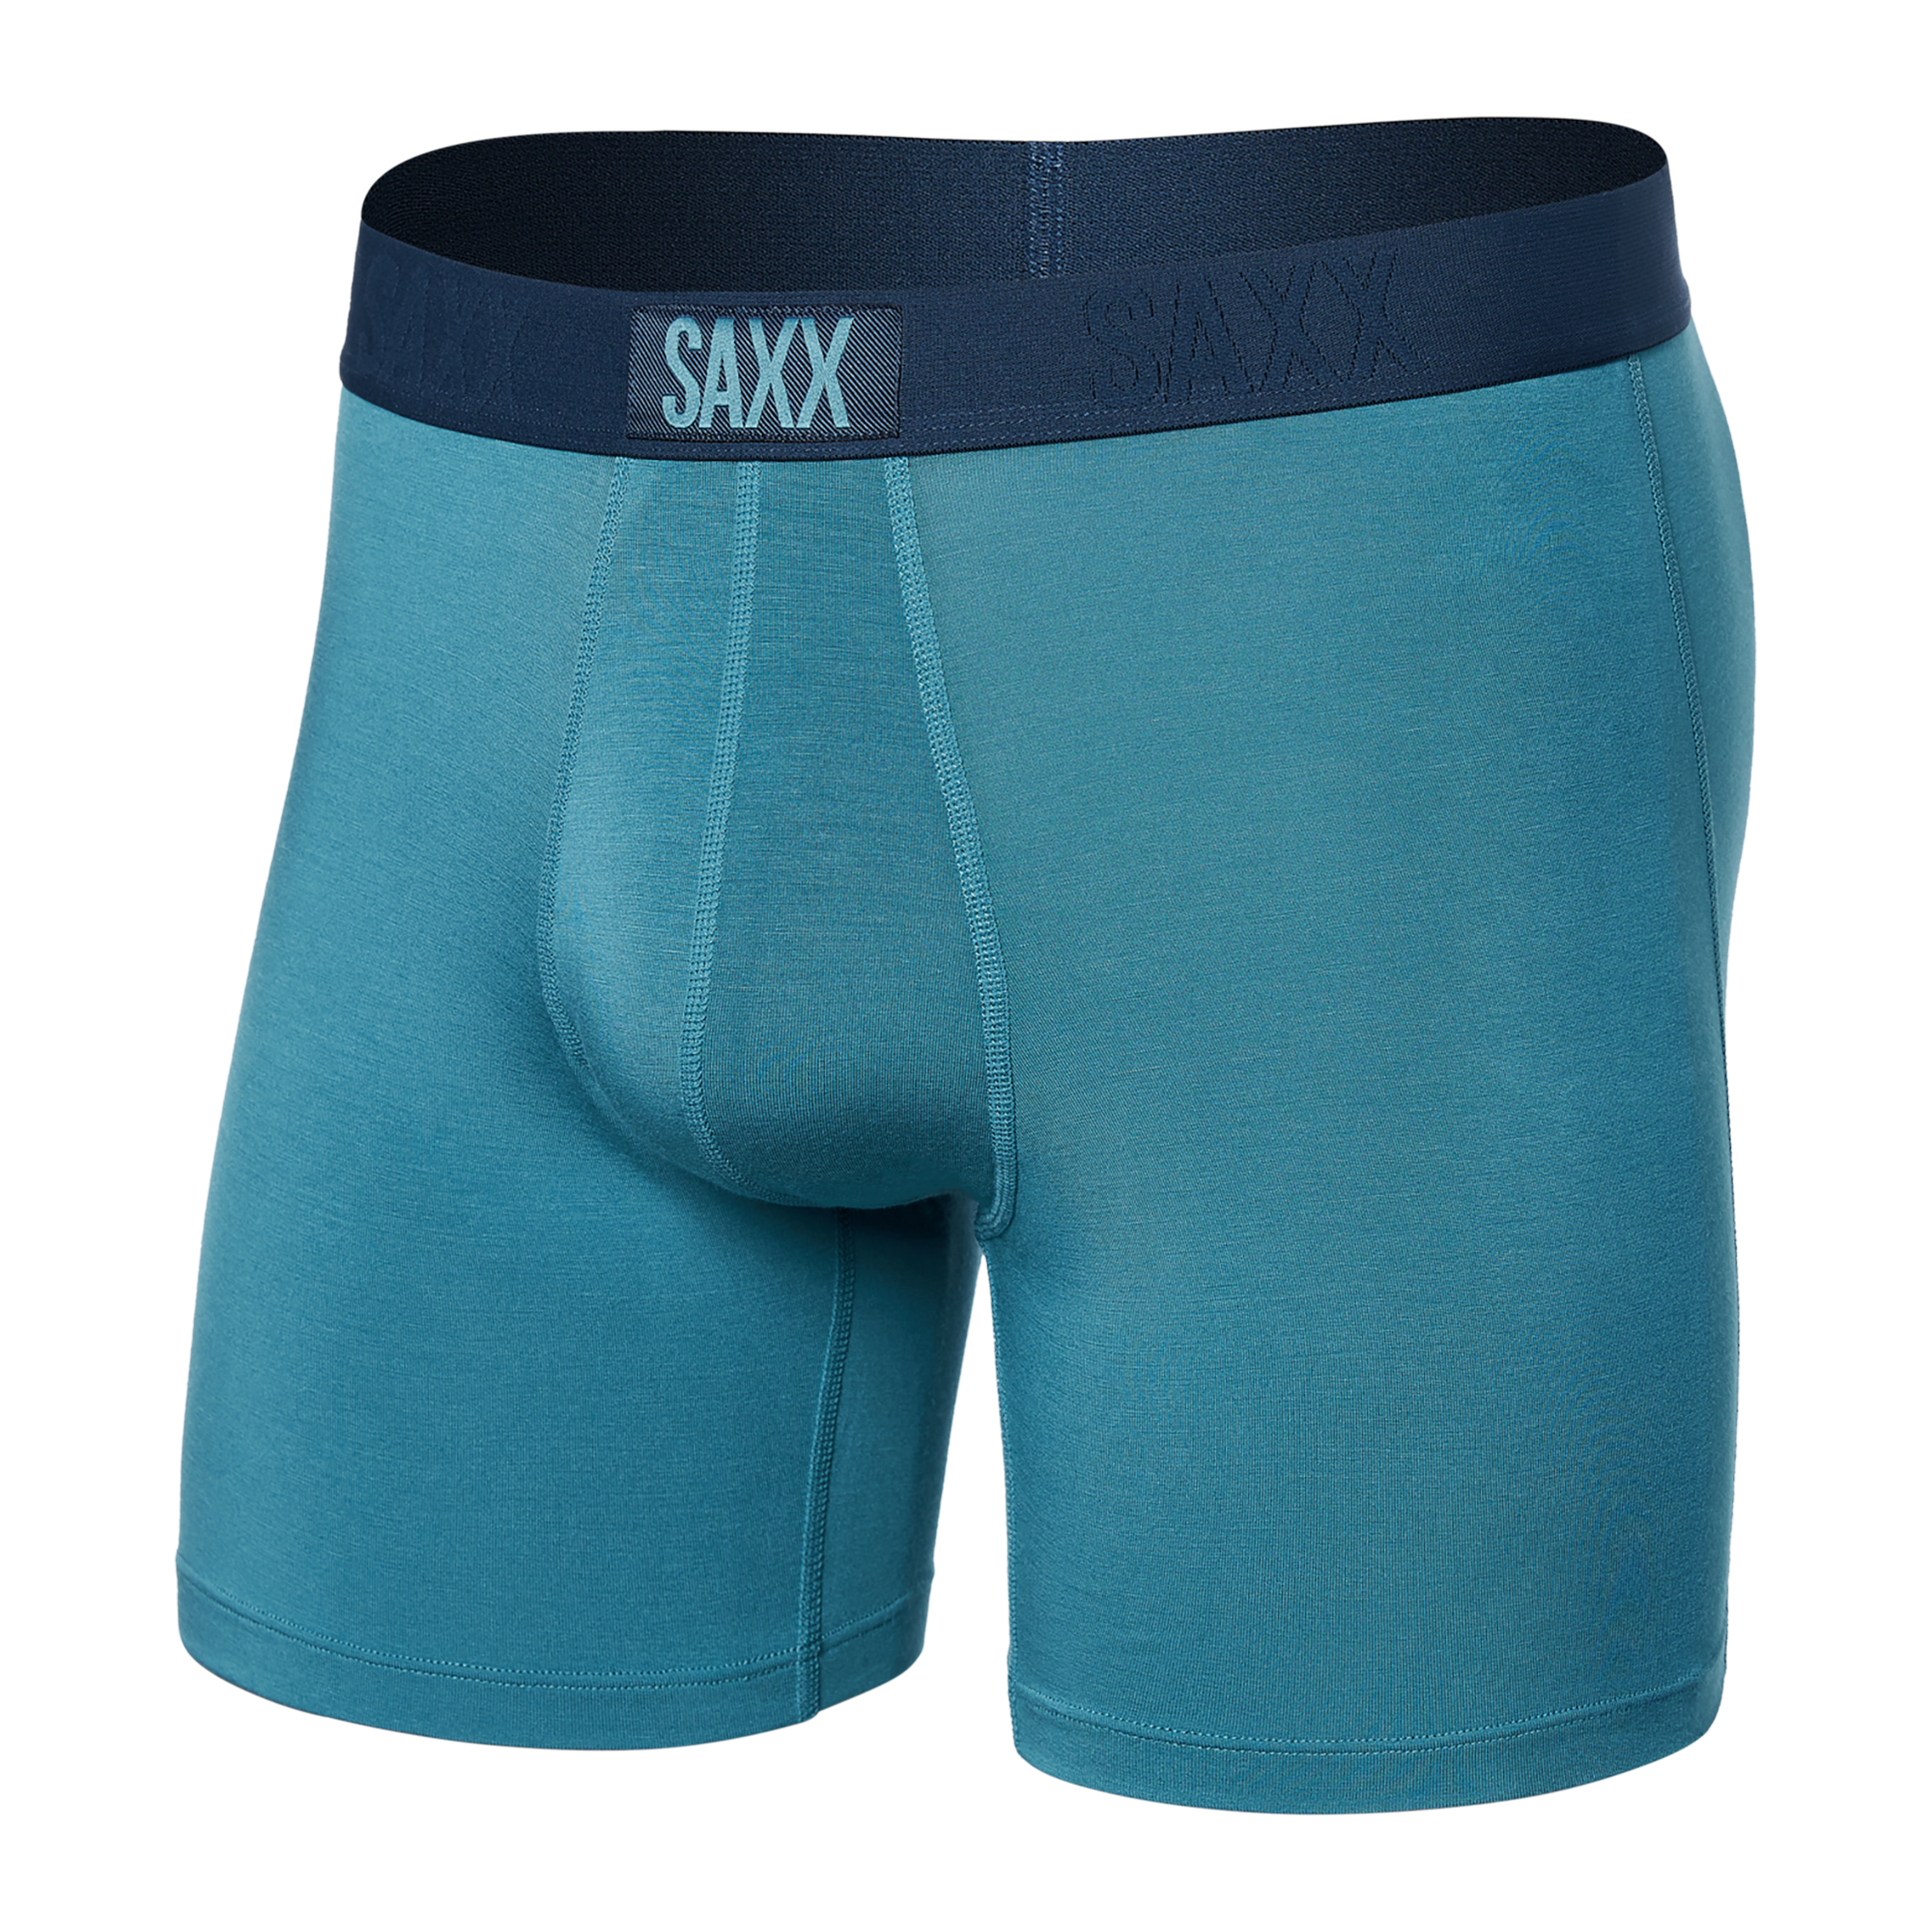 SAXX boxer vibe Hydro Blue